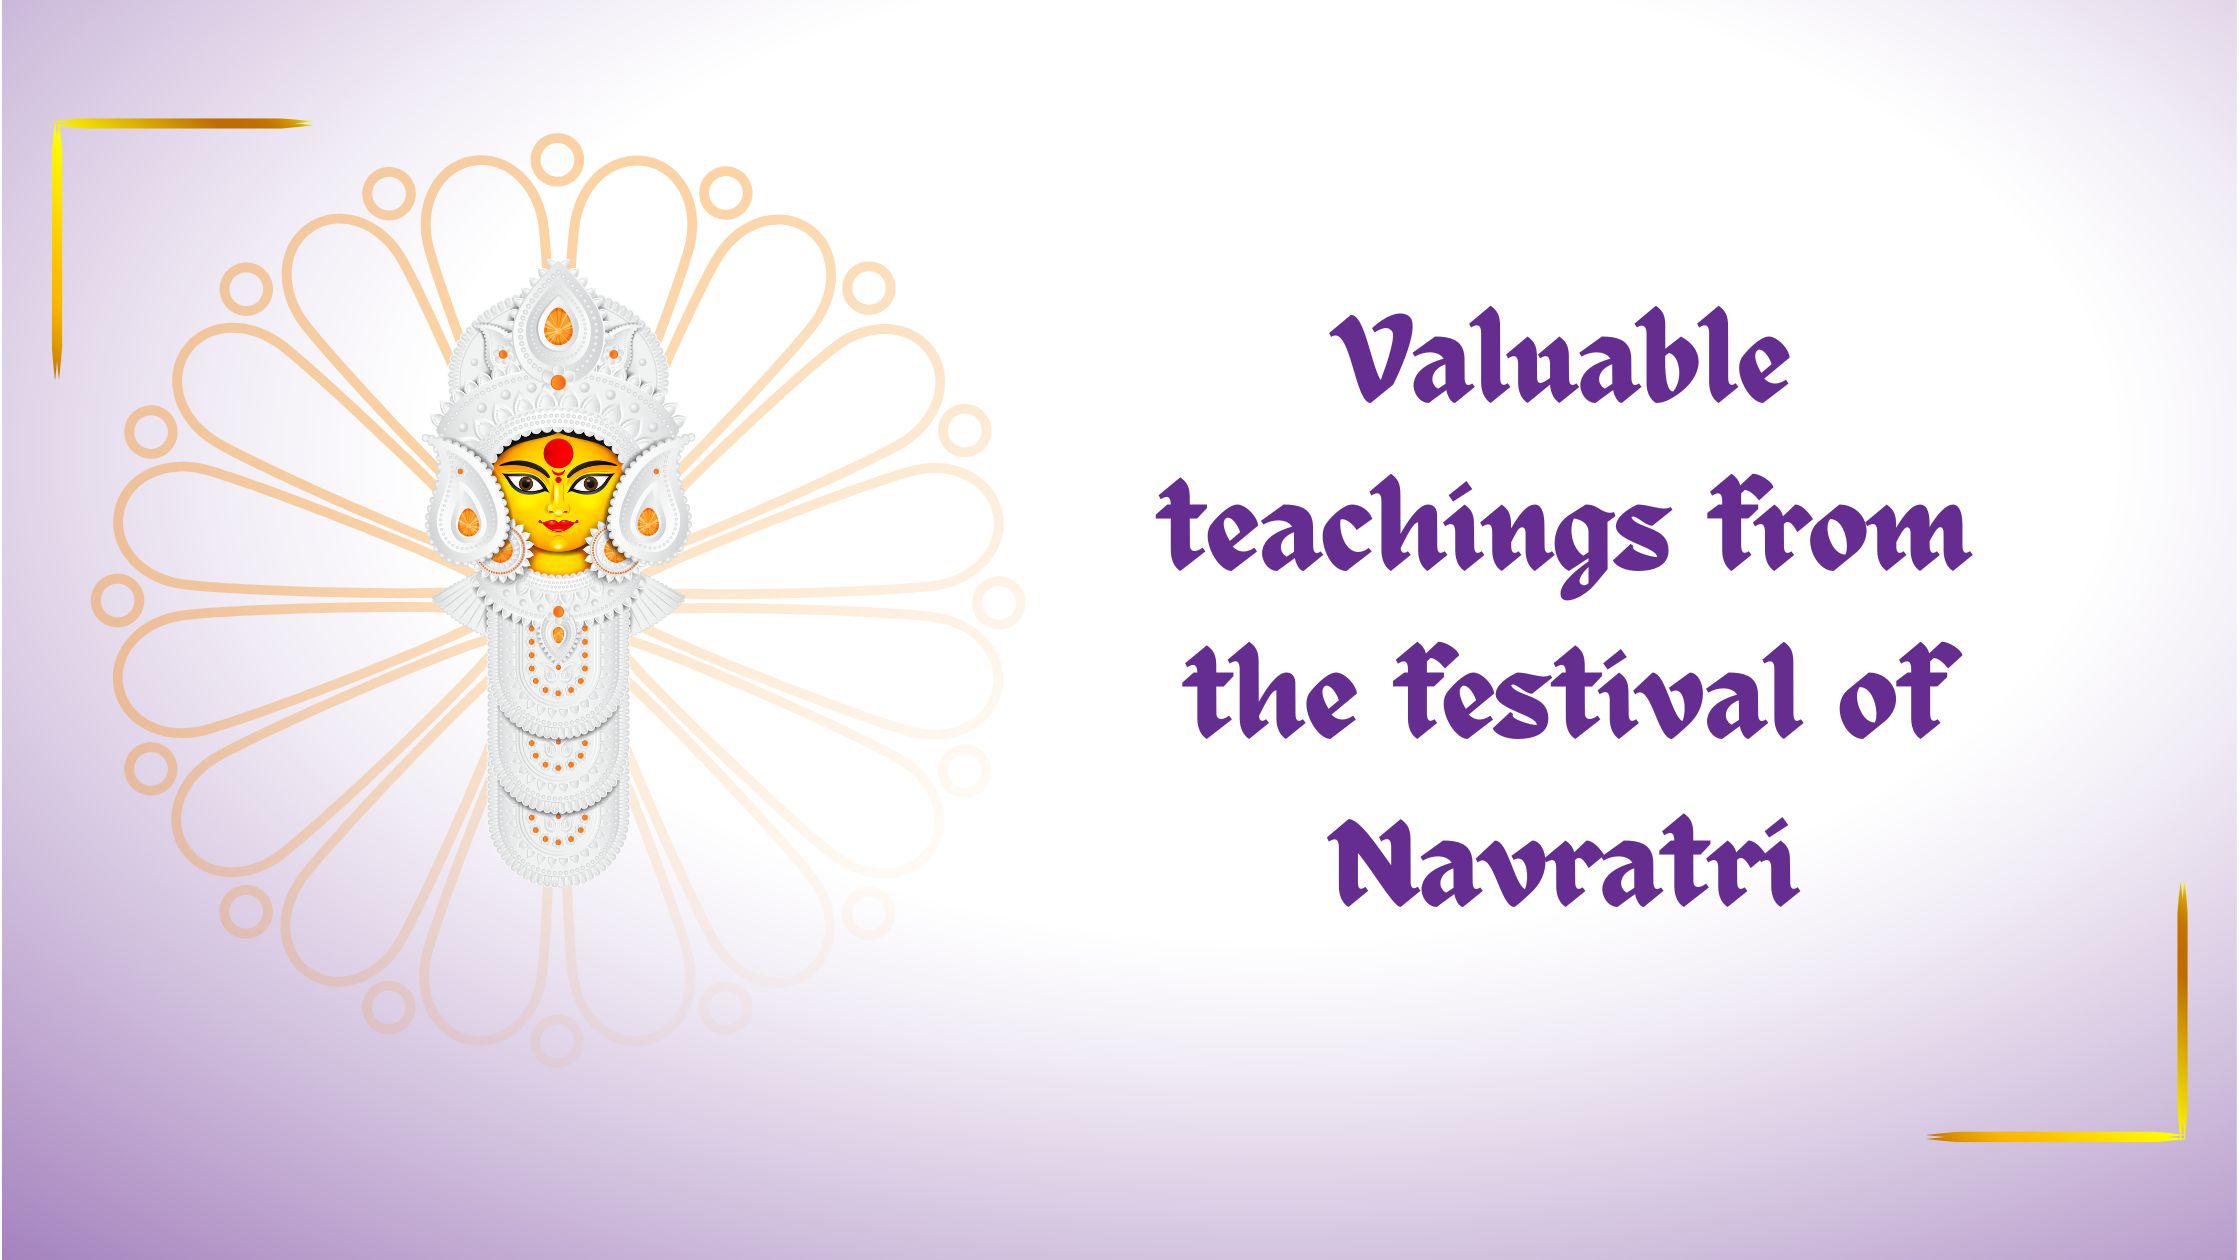 Valuable teachings from the festival of Navratri